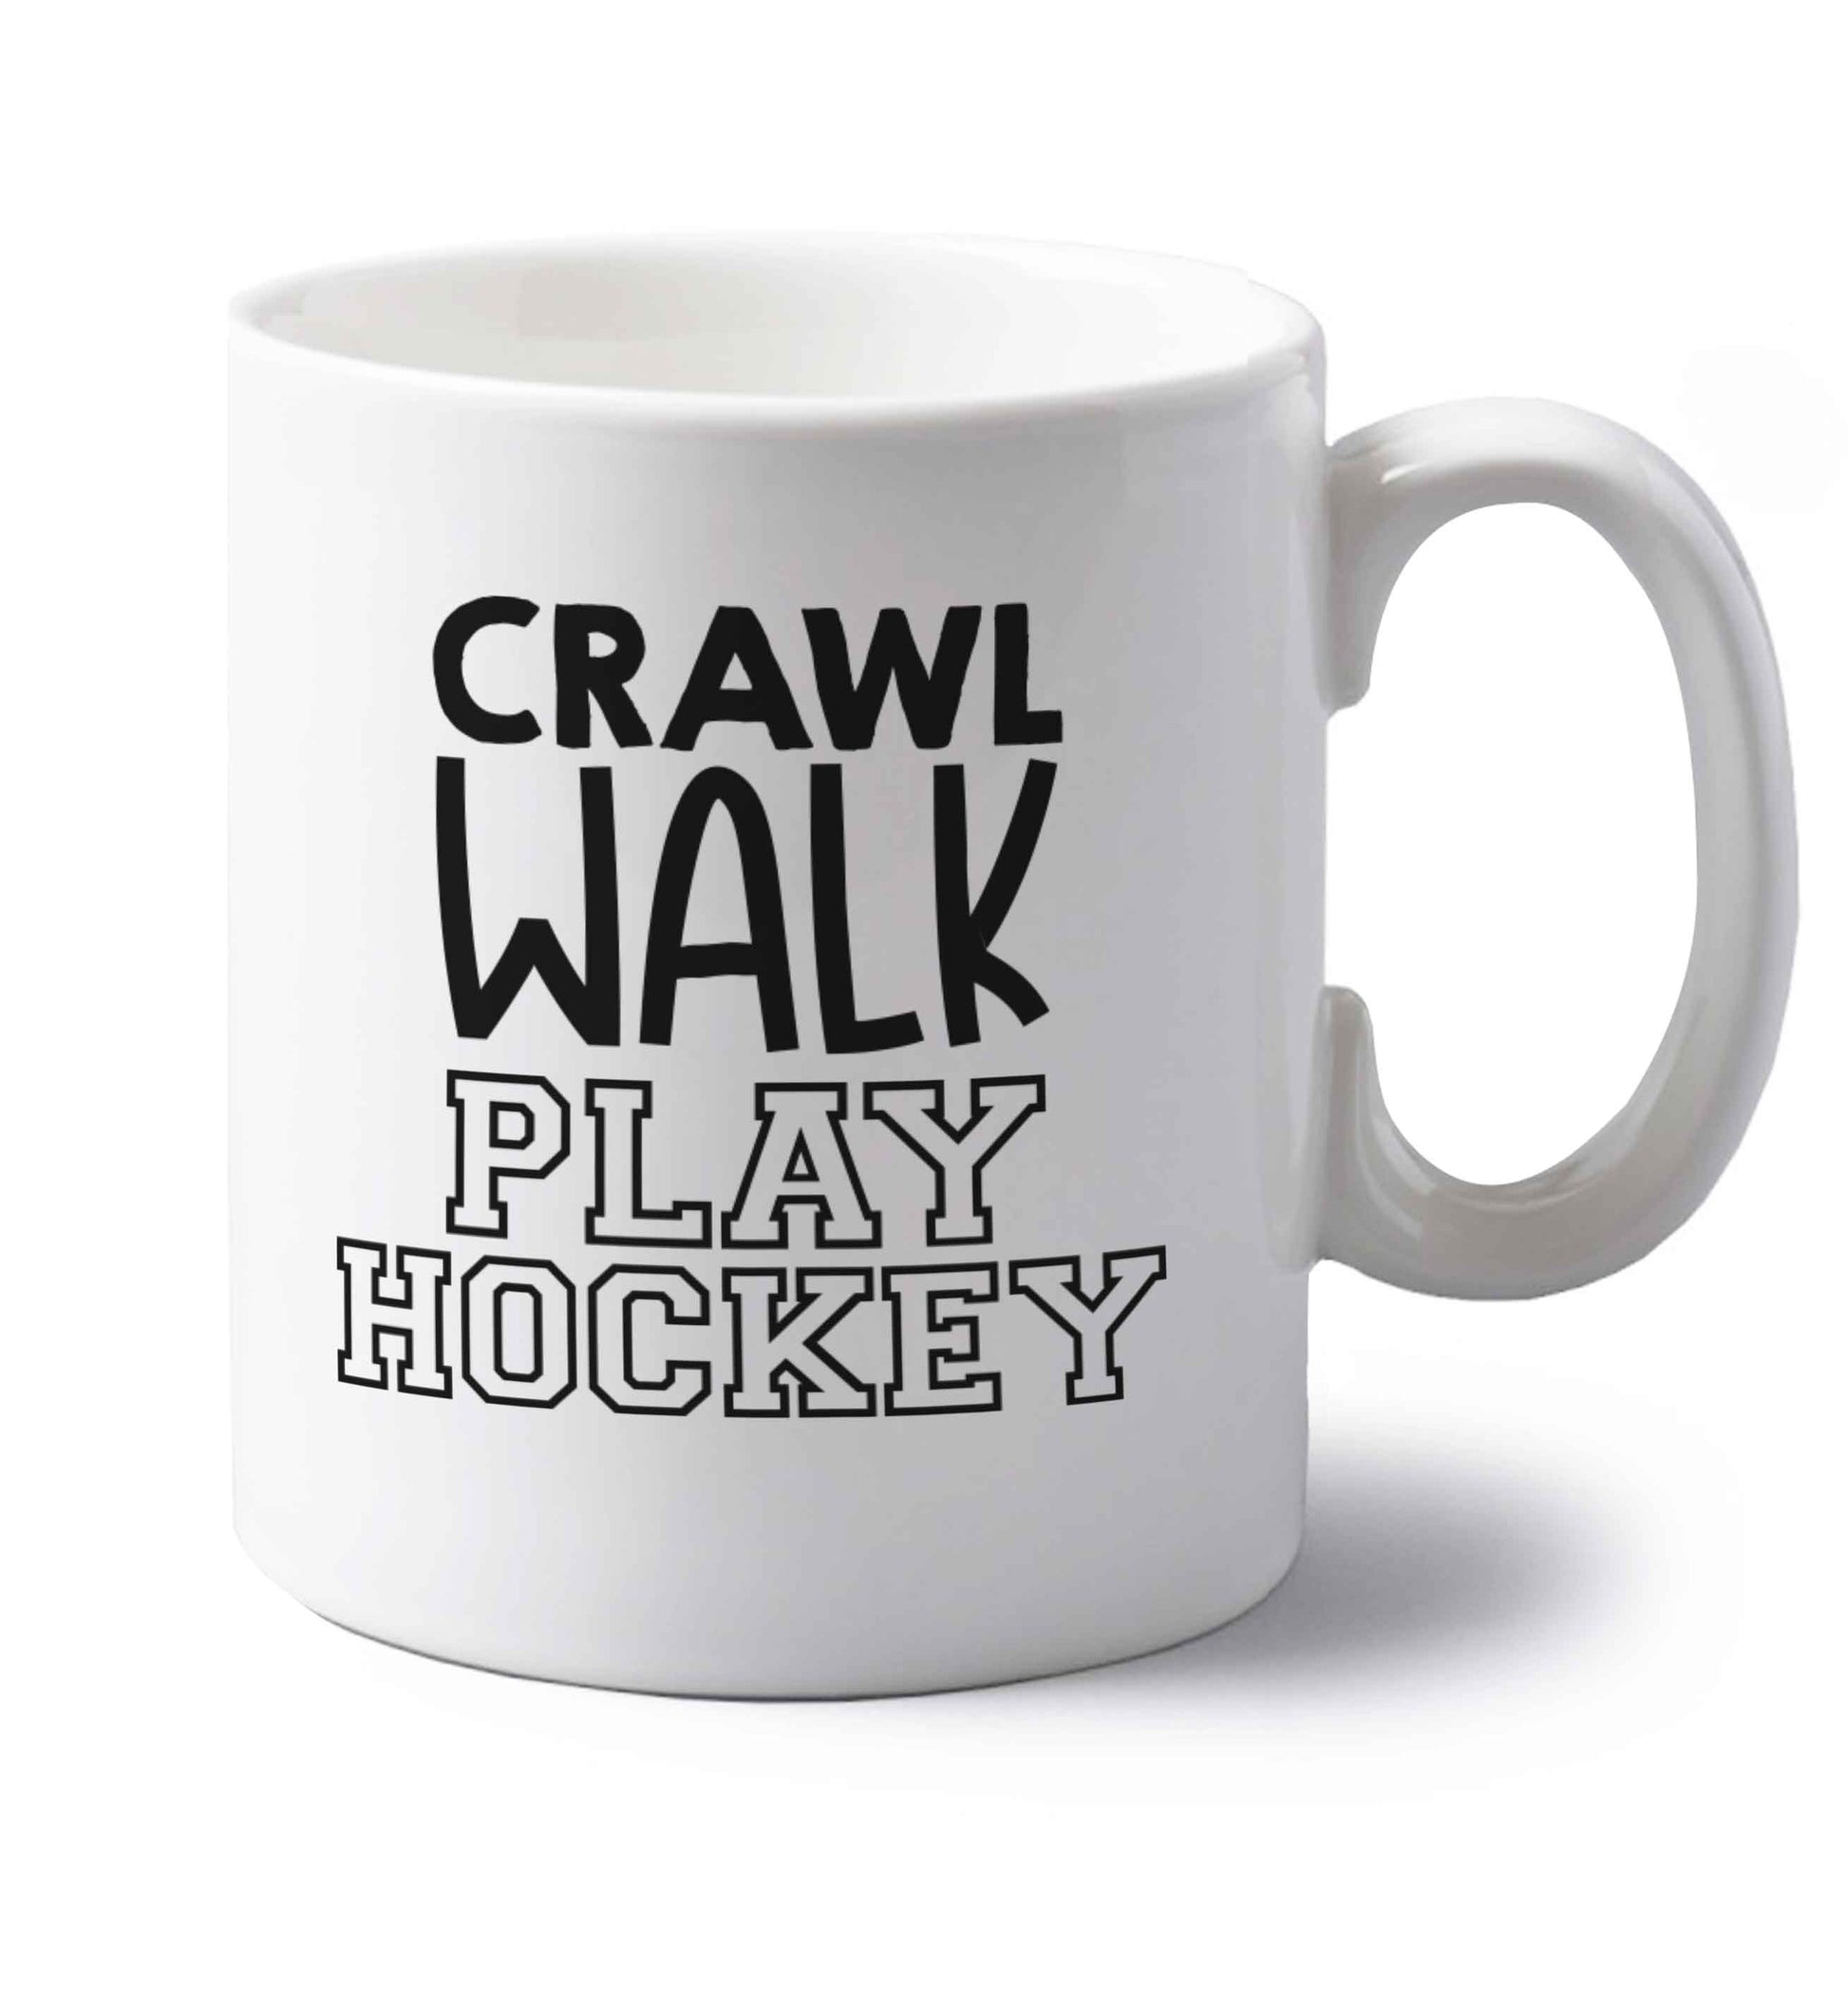 Crawl walk play hockey left handed white ceramic mug 